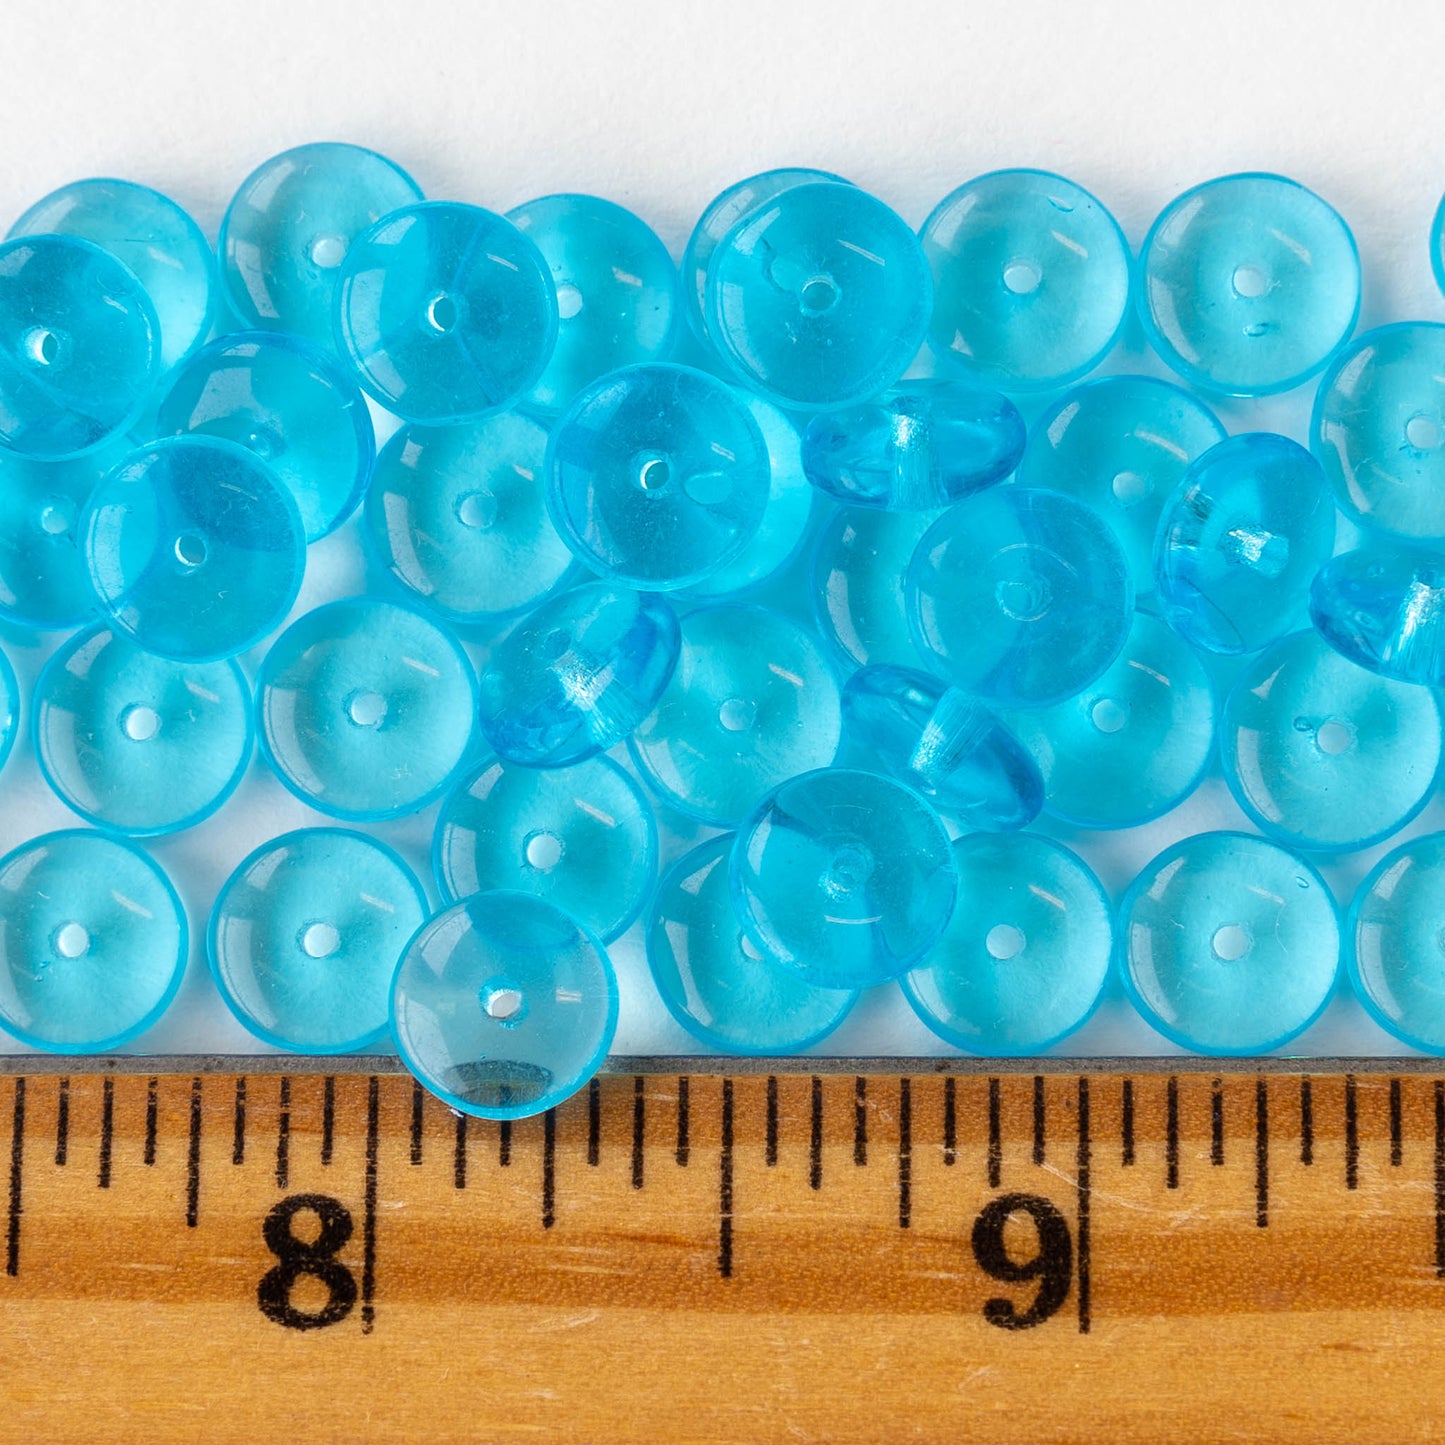 8mm Glass Rondelle Beads - Aqua - 30 Beads